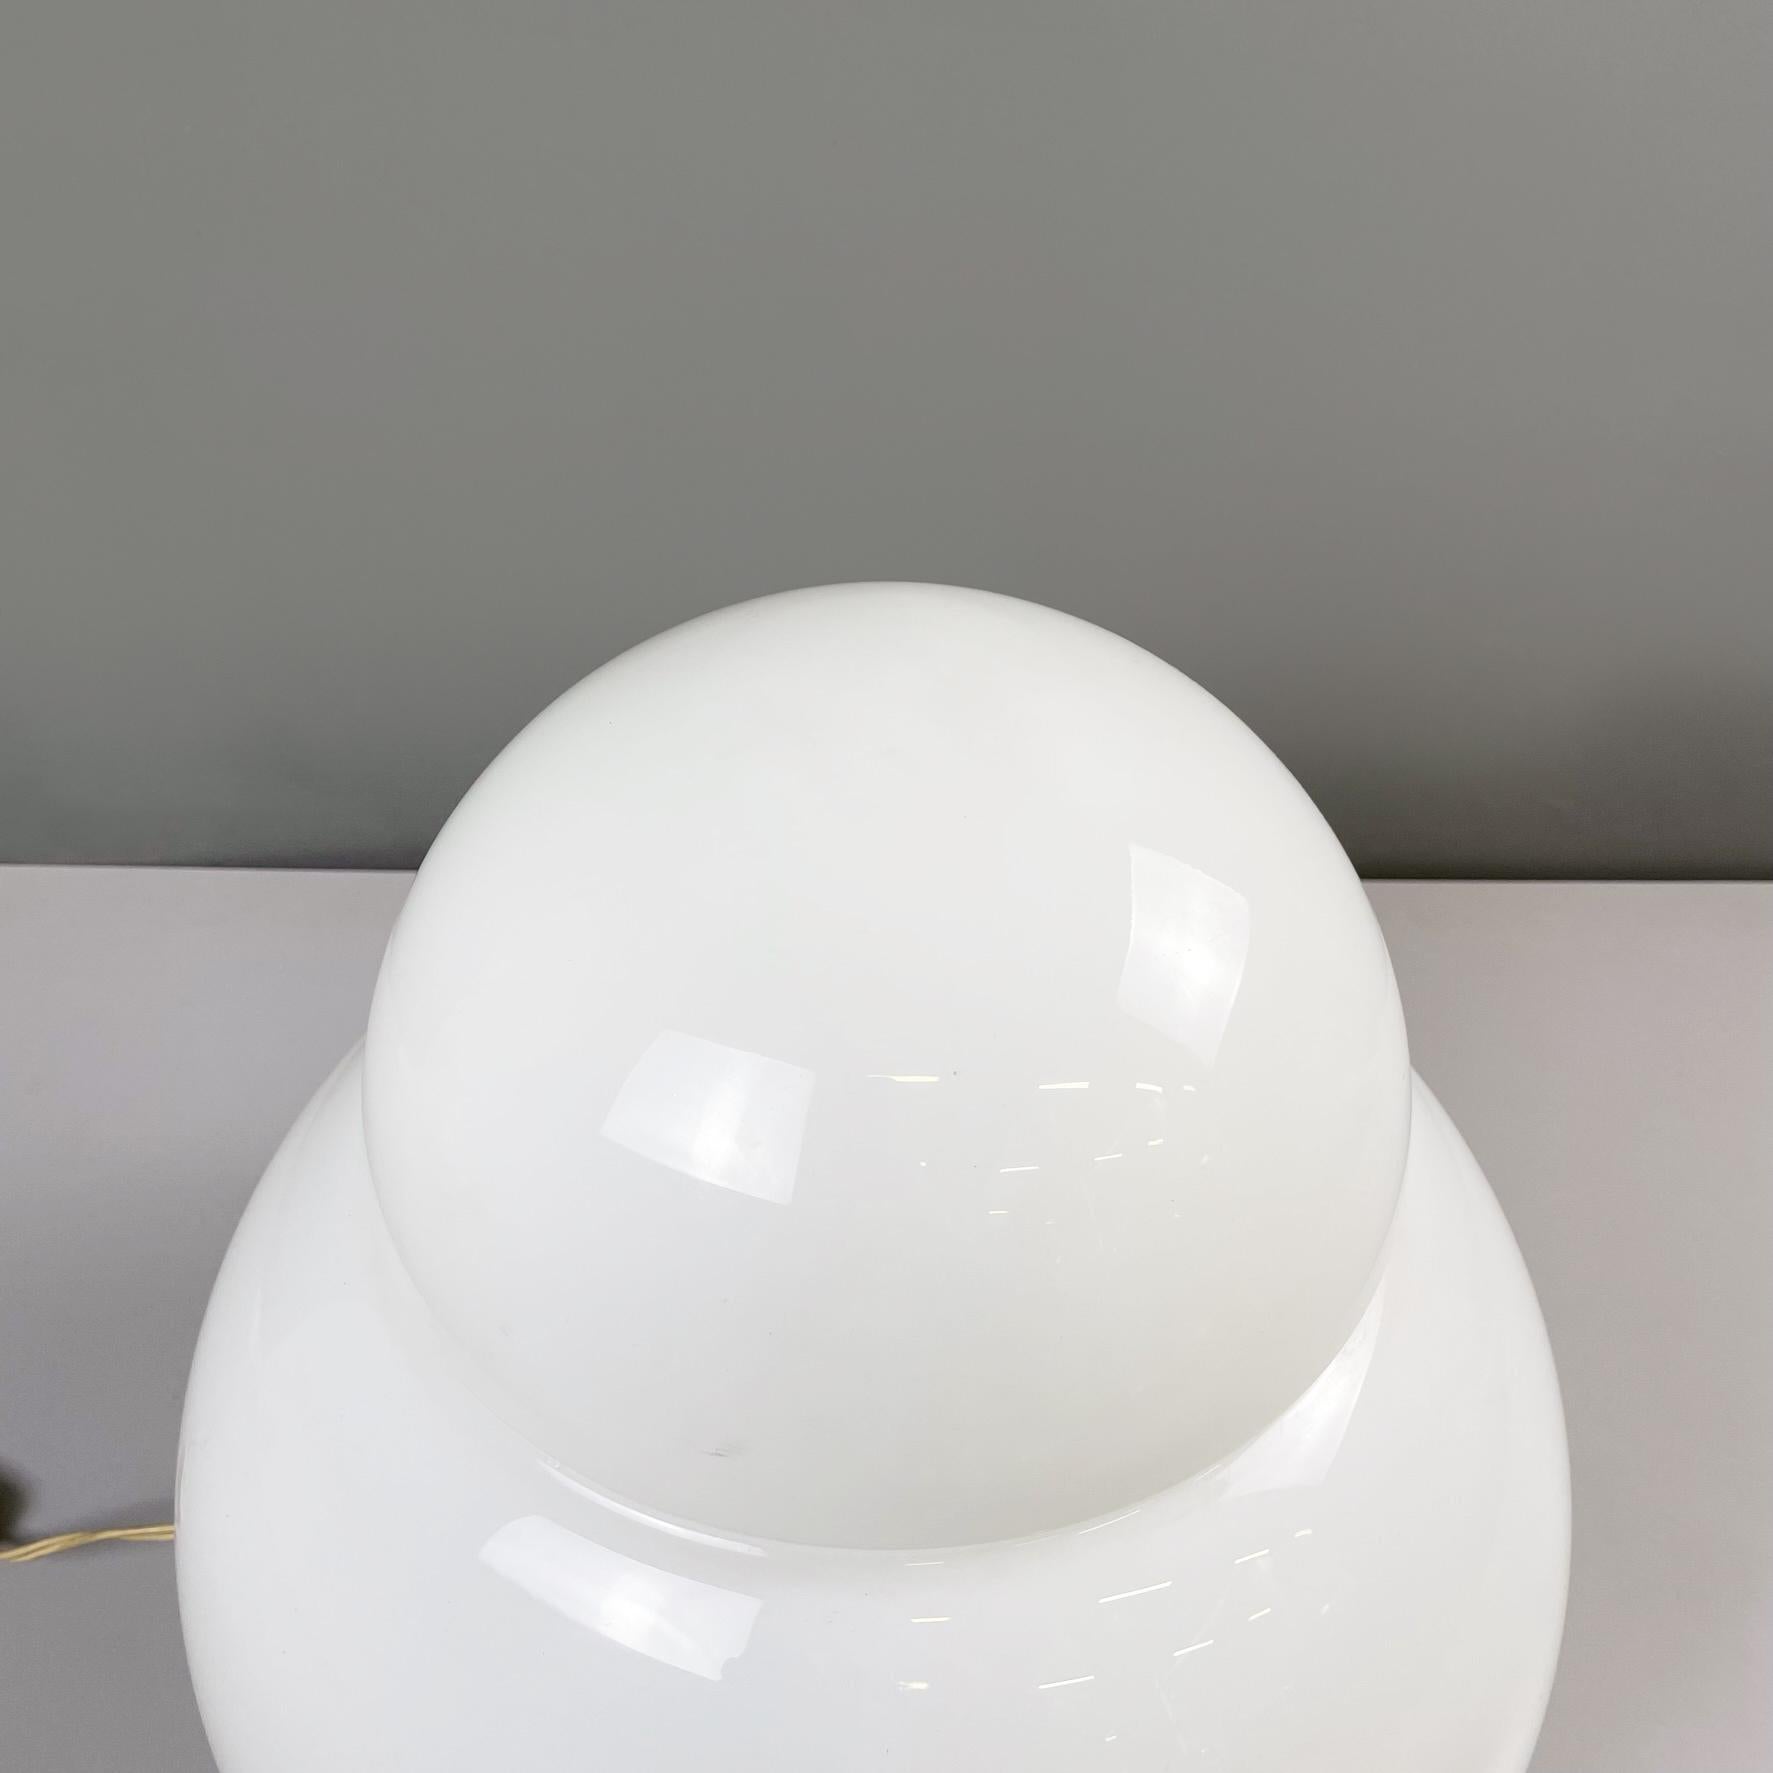 Italian Modern Opaline Glass Table Lamp Daruma by Asti for Fontana Arte, 1970s For Sale 1